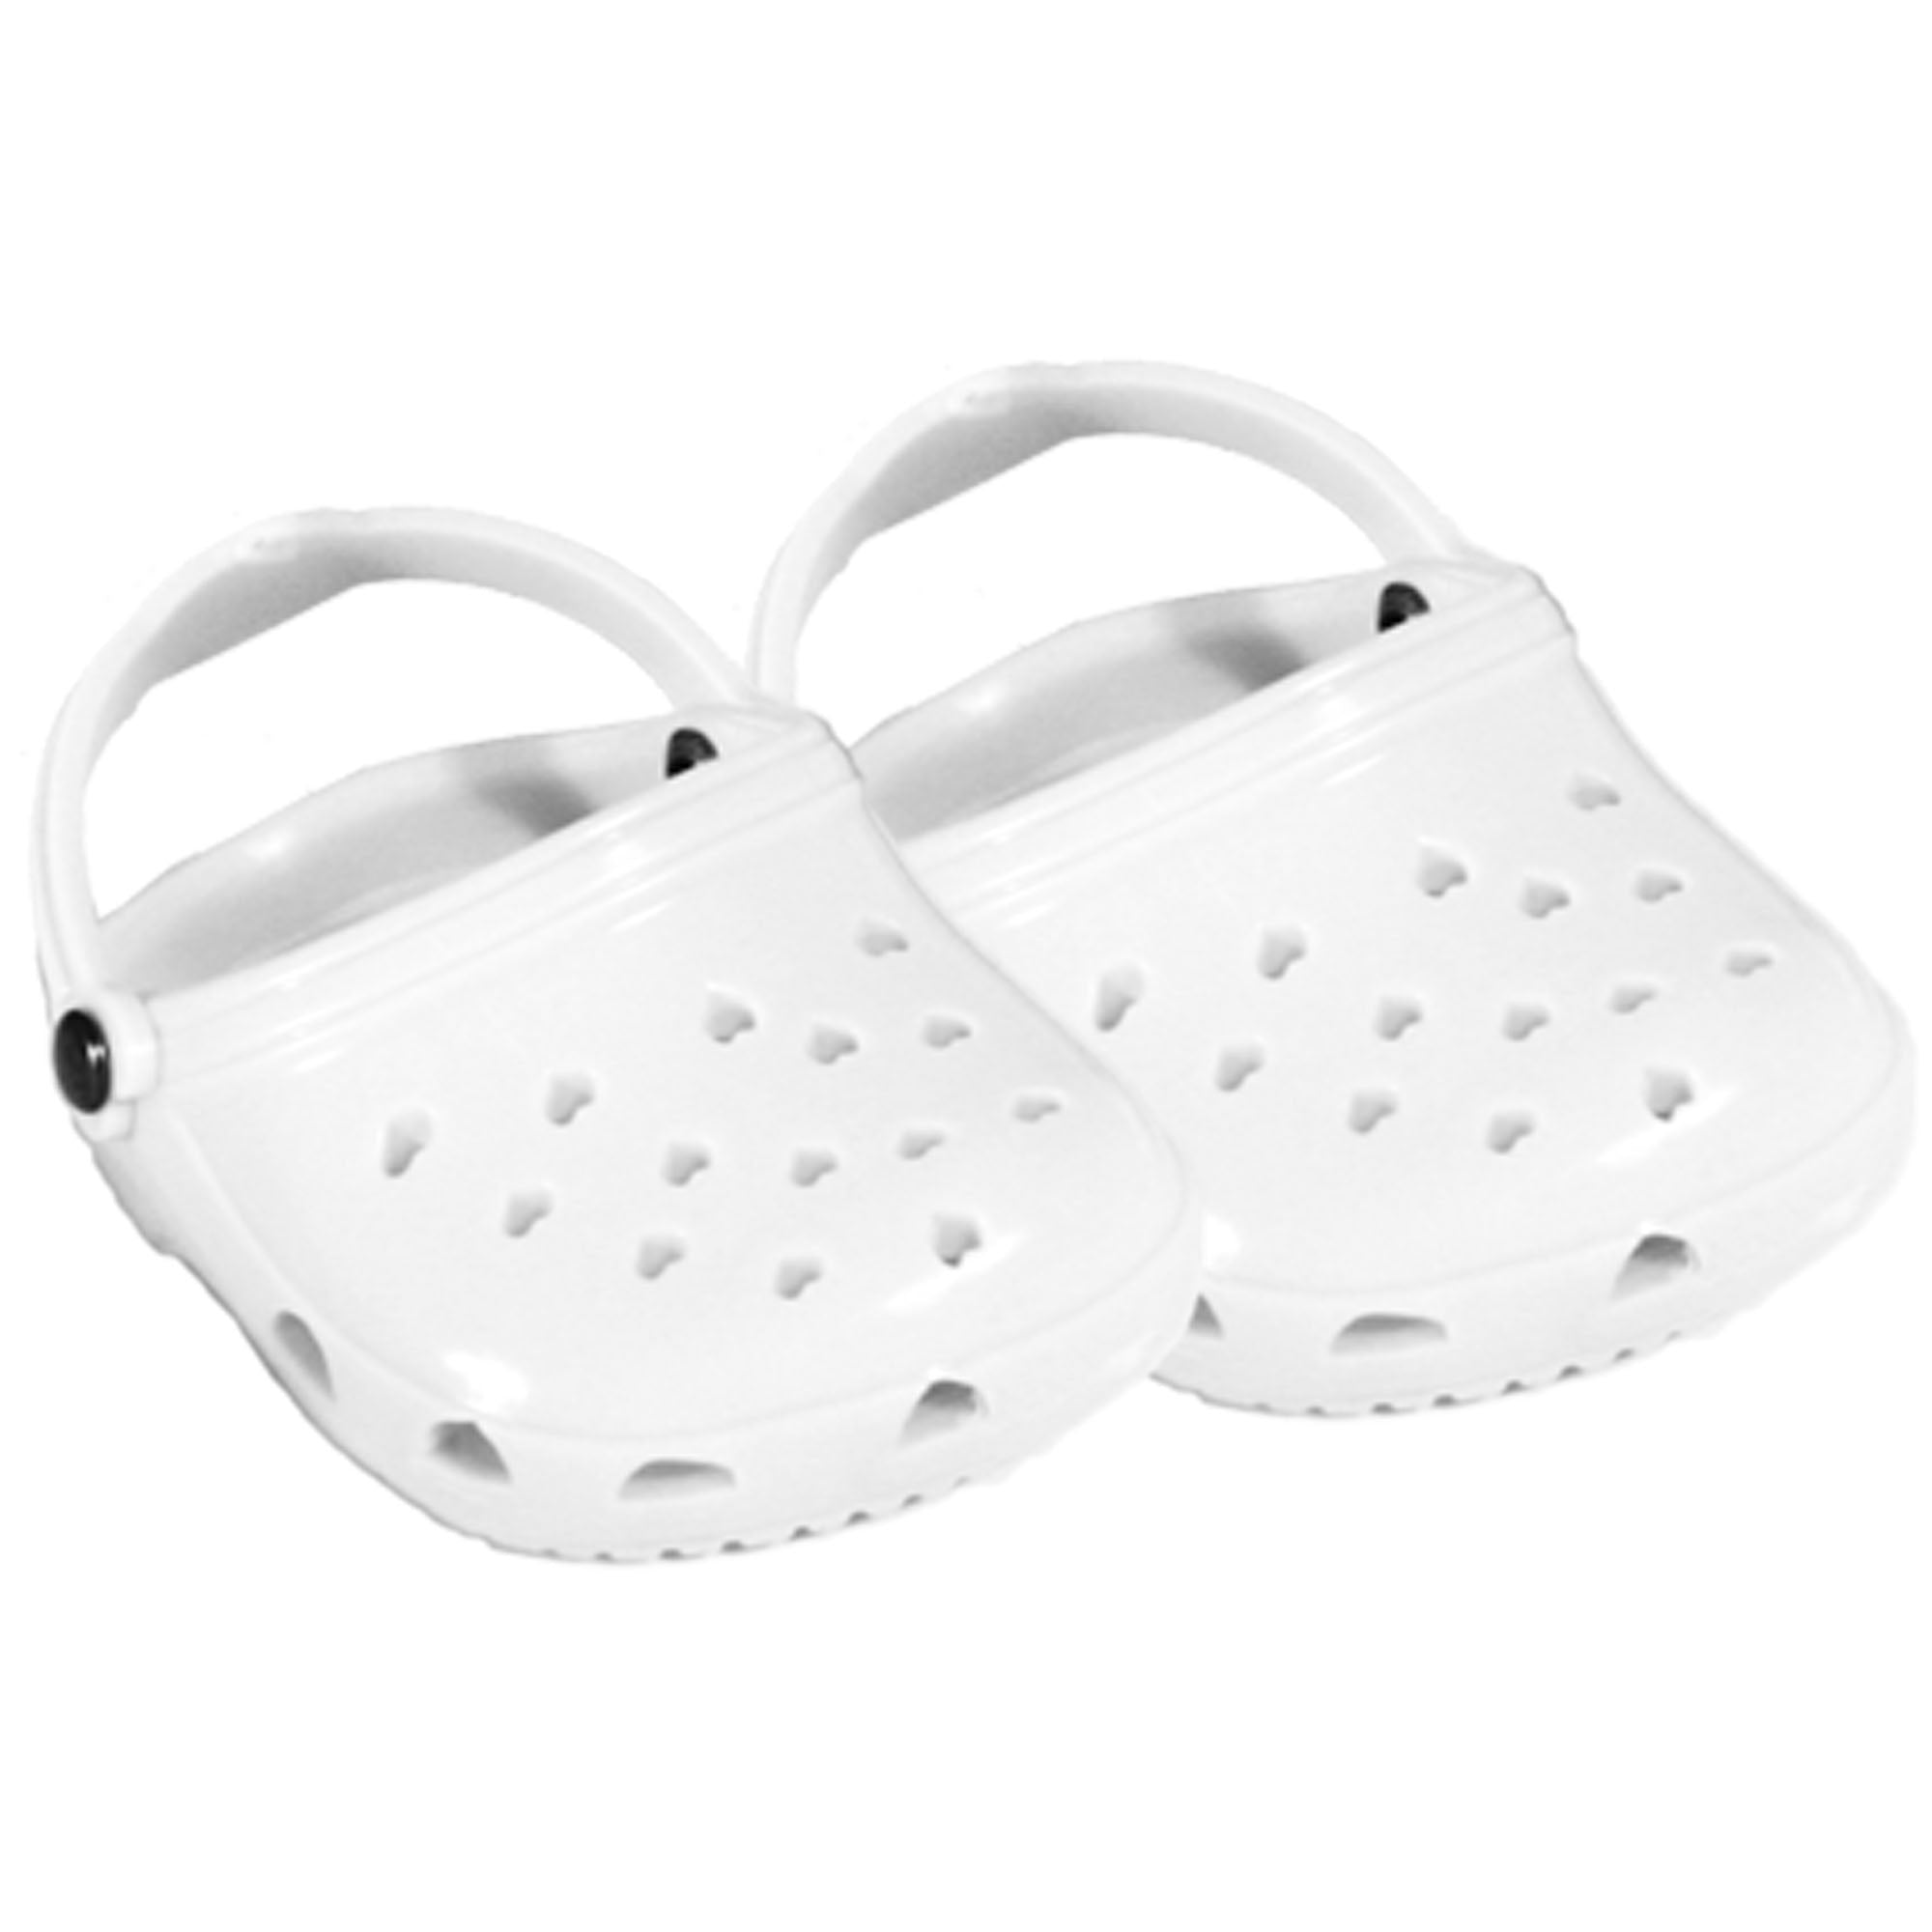 Sophias Clog Sandal Shoes Accessory for 18" Dolls, White